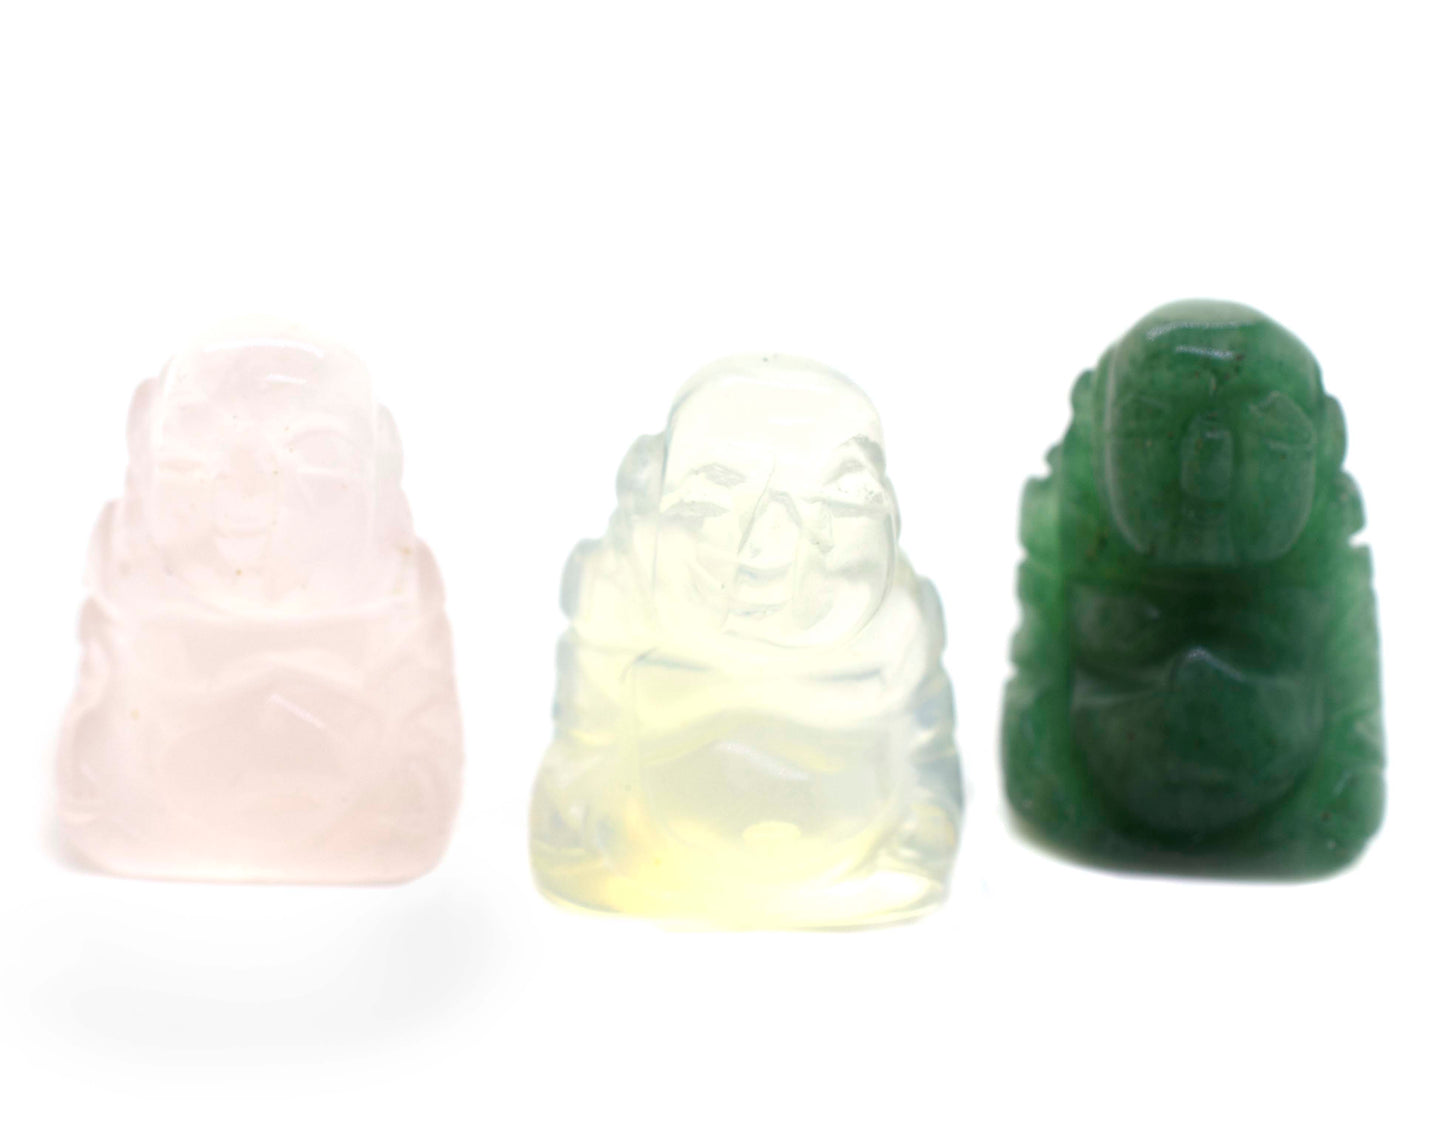 Three Laughing Buddha Gemstone Figures made of jade on a white background.